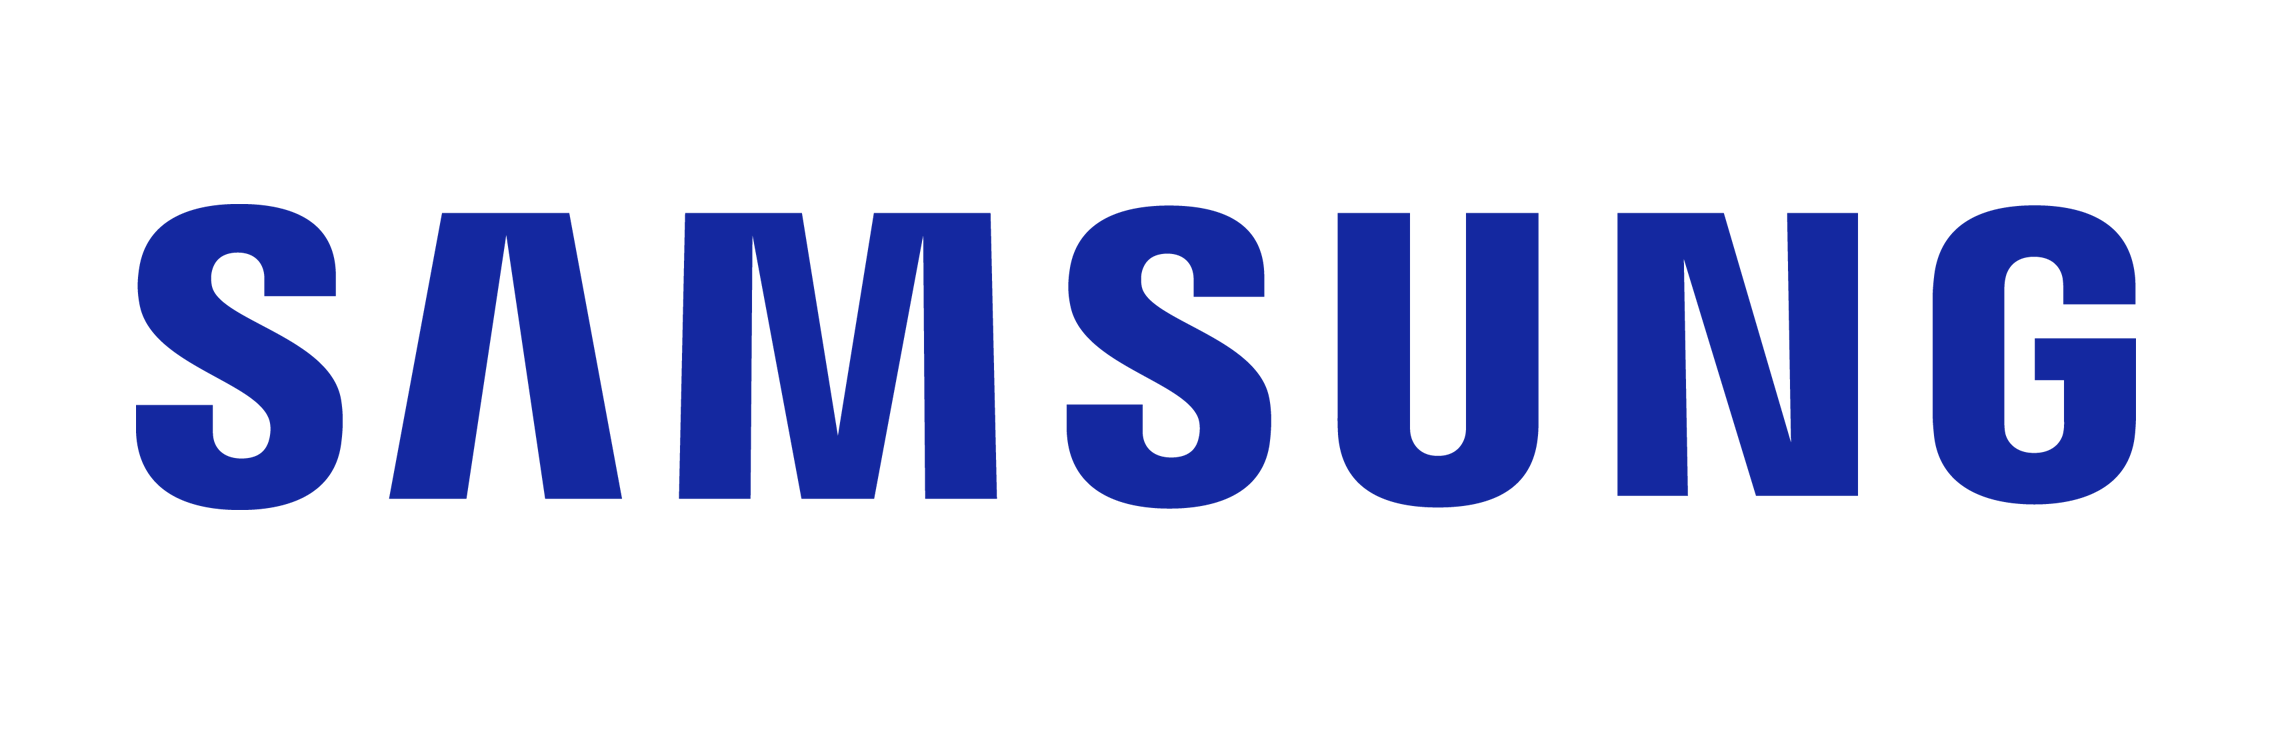 Samsung Serif Series (2019, 2020)